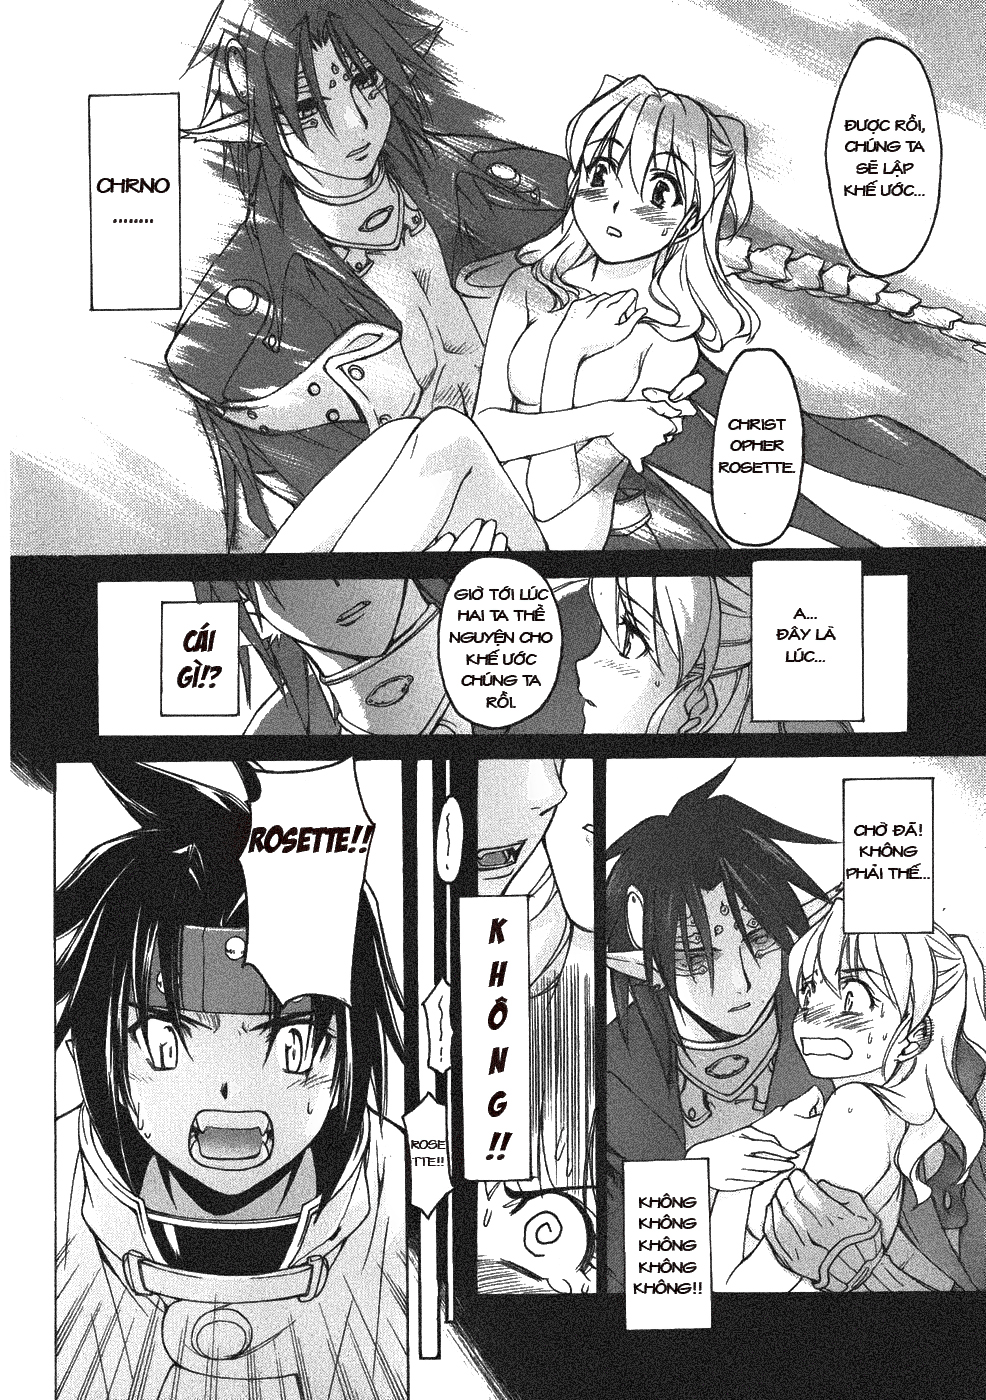 [Manga] Chrono Crusade (Đọc online tại SSF) CHRNO-CRUSADE-02-022